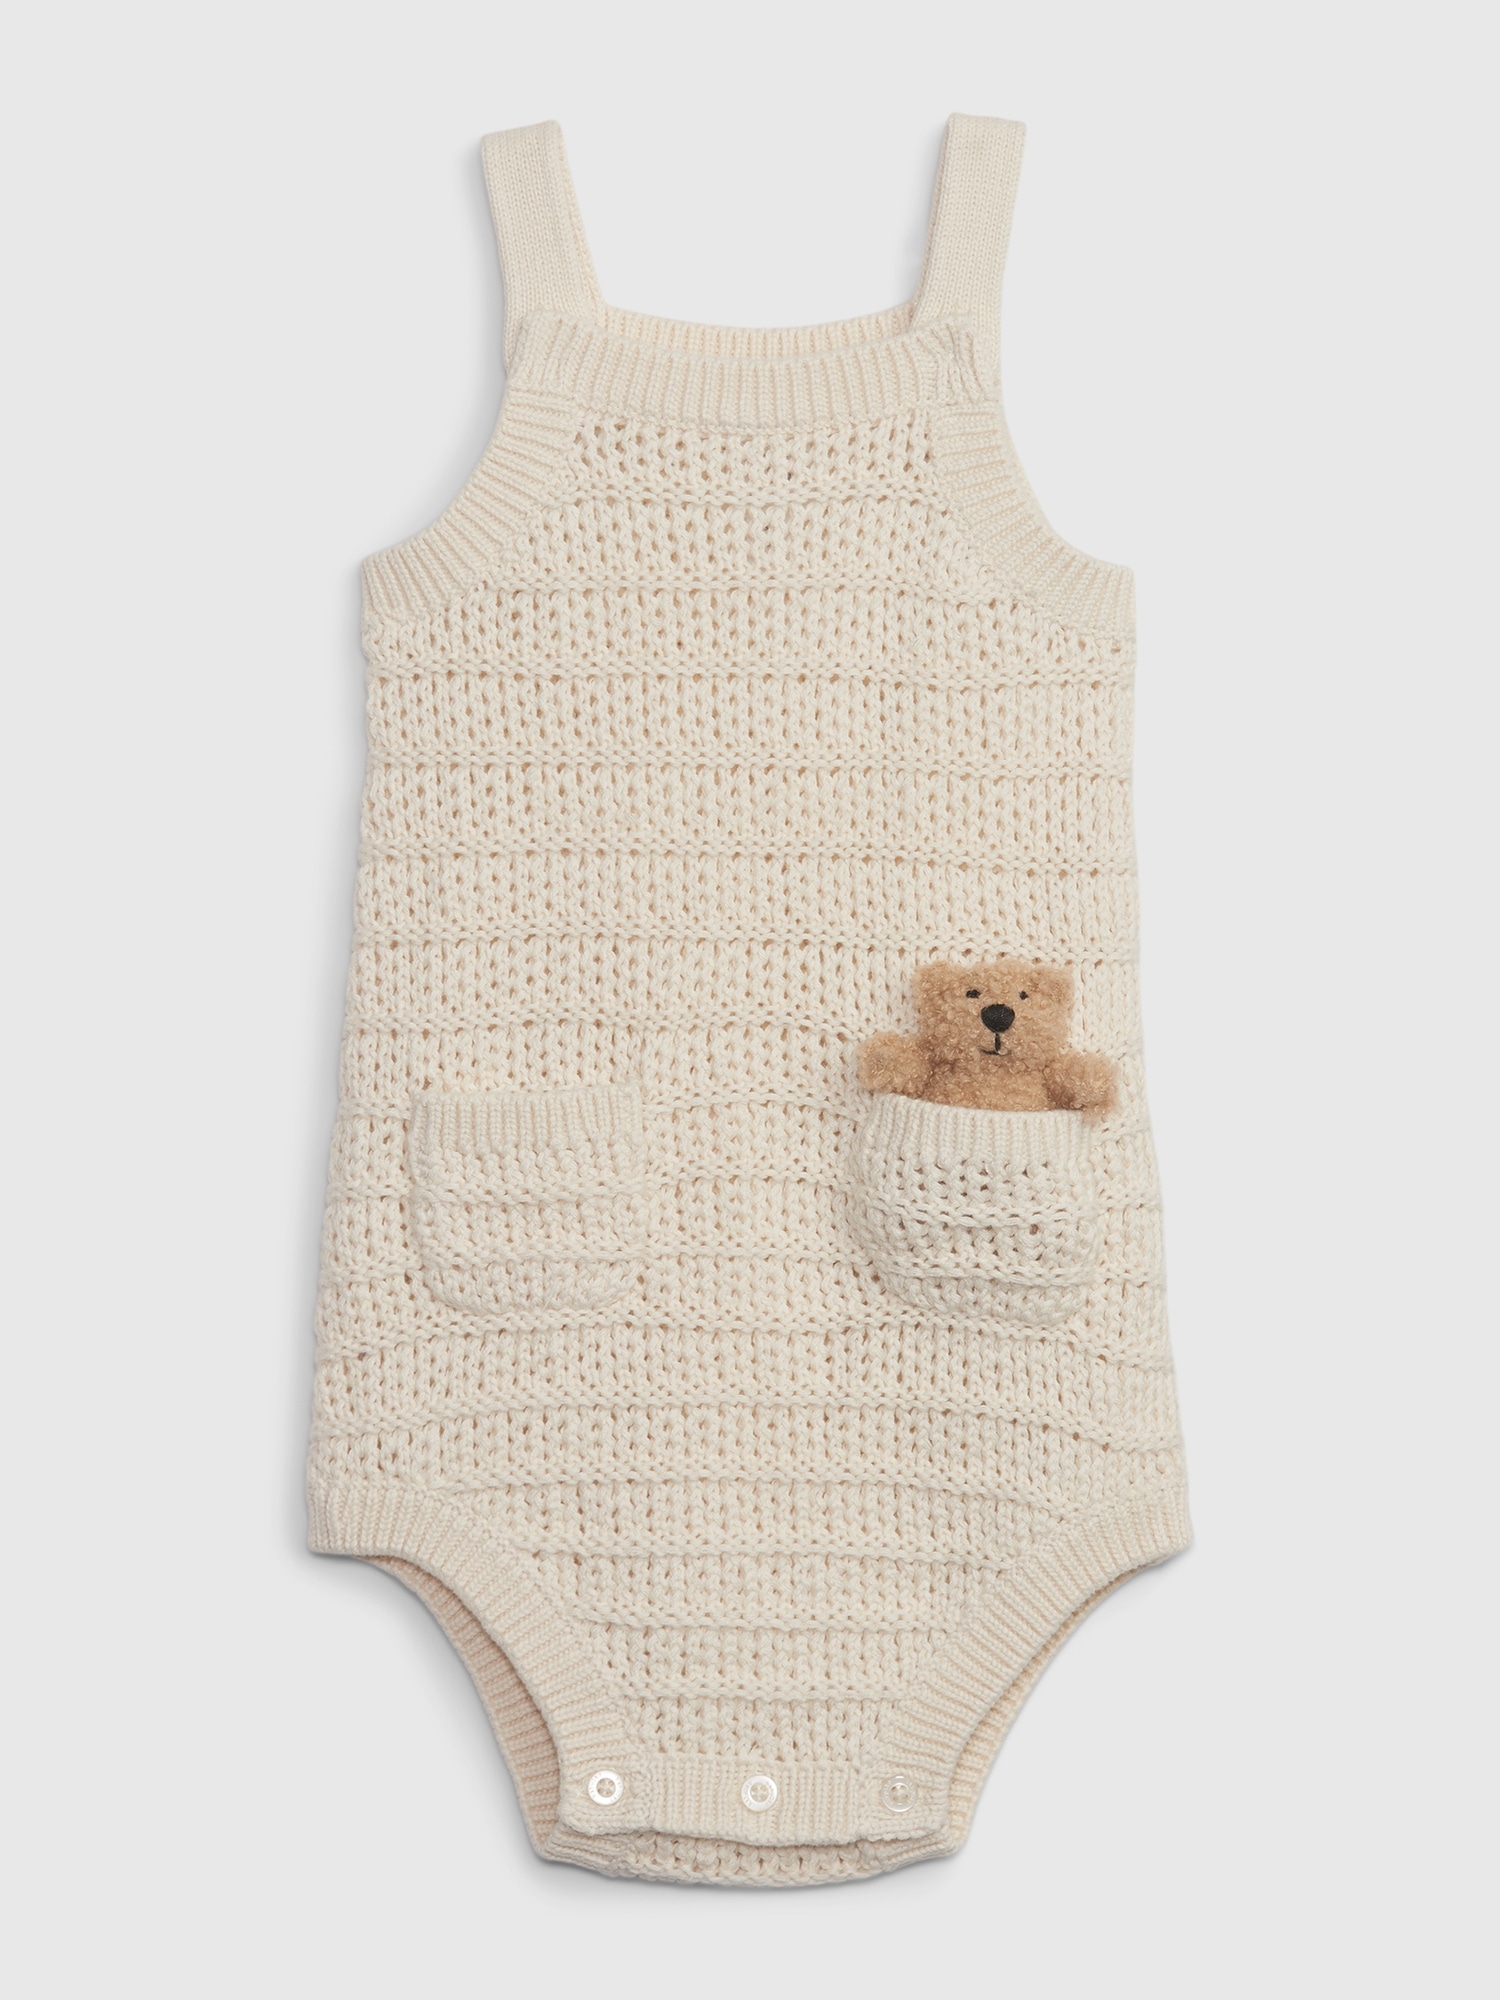 Gap Baby Crochet Shorty One-Piece